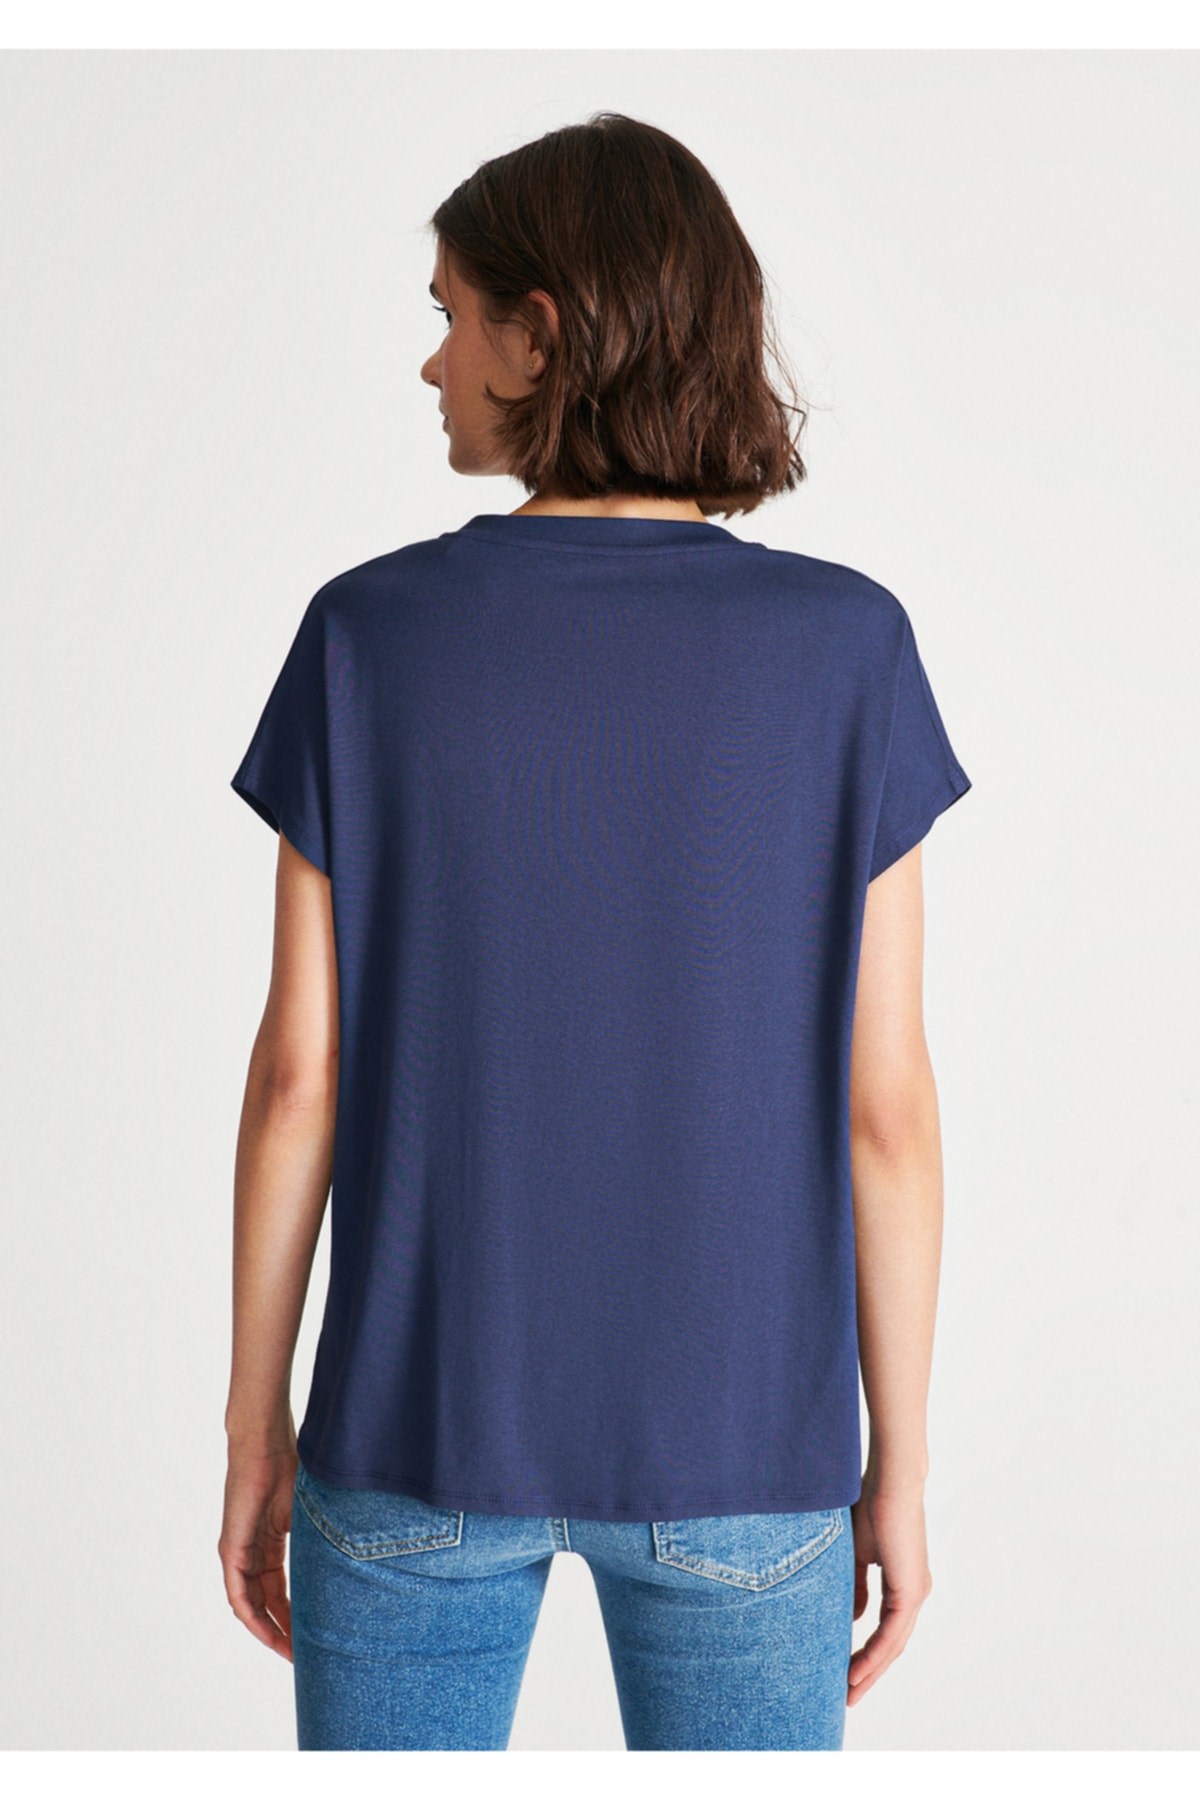 Mavi Jeans Kadın T-Shirt 167714-28319 